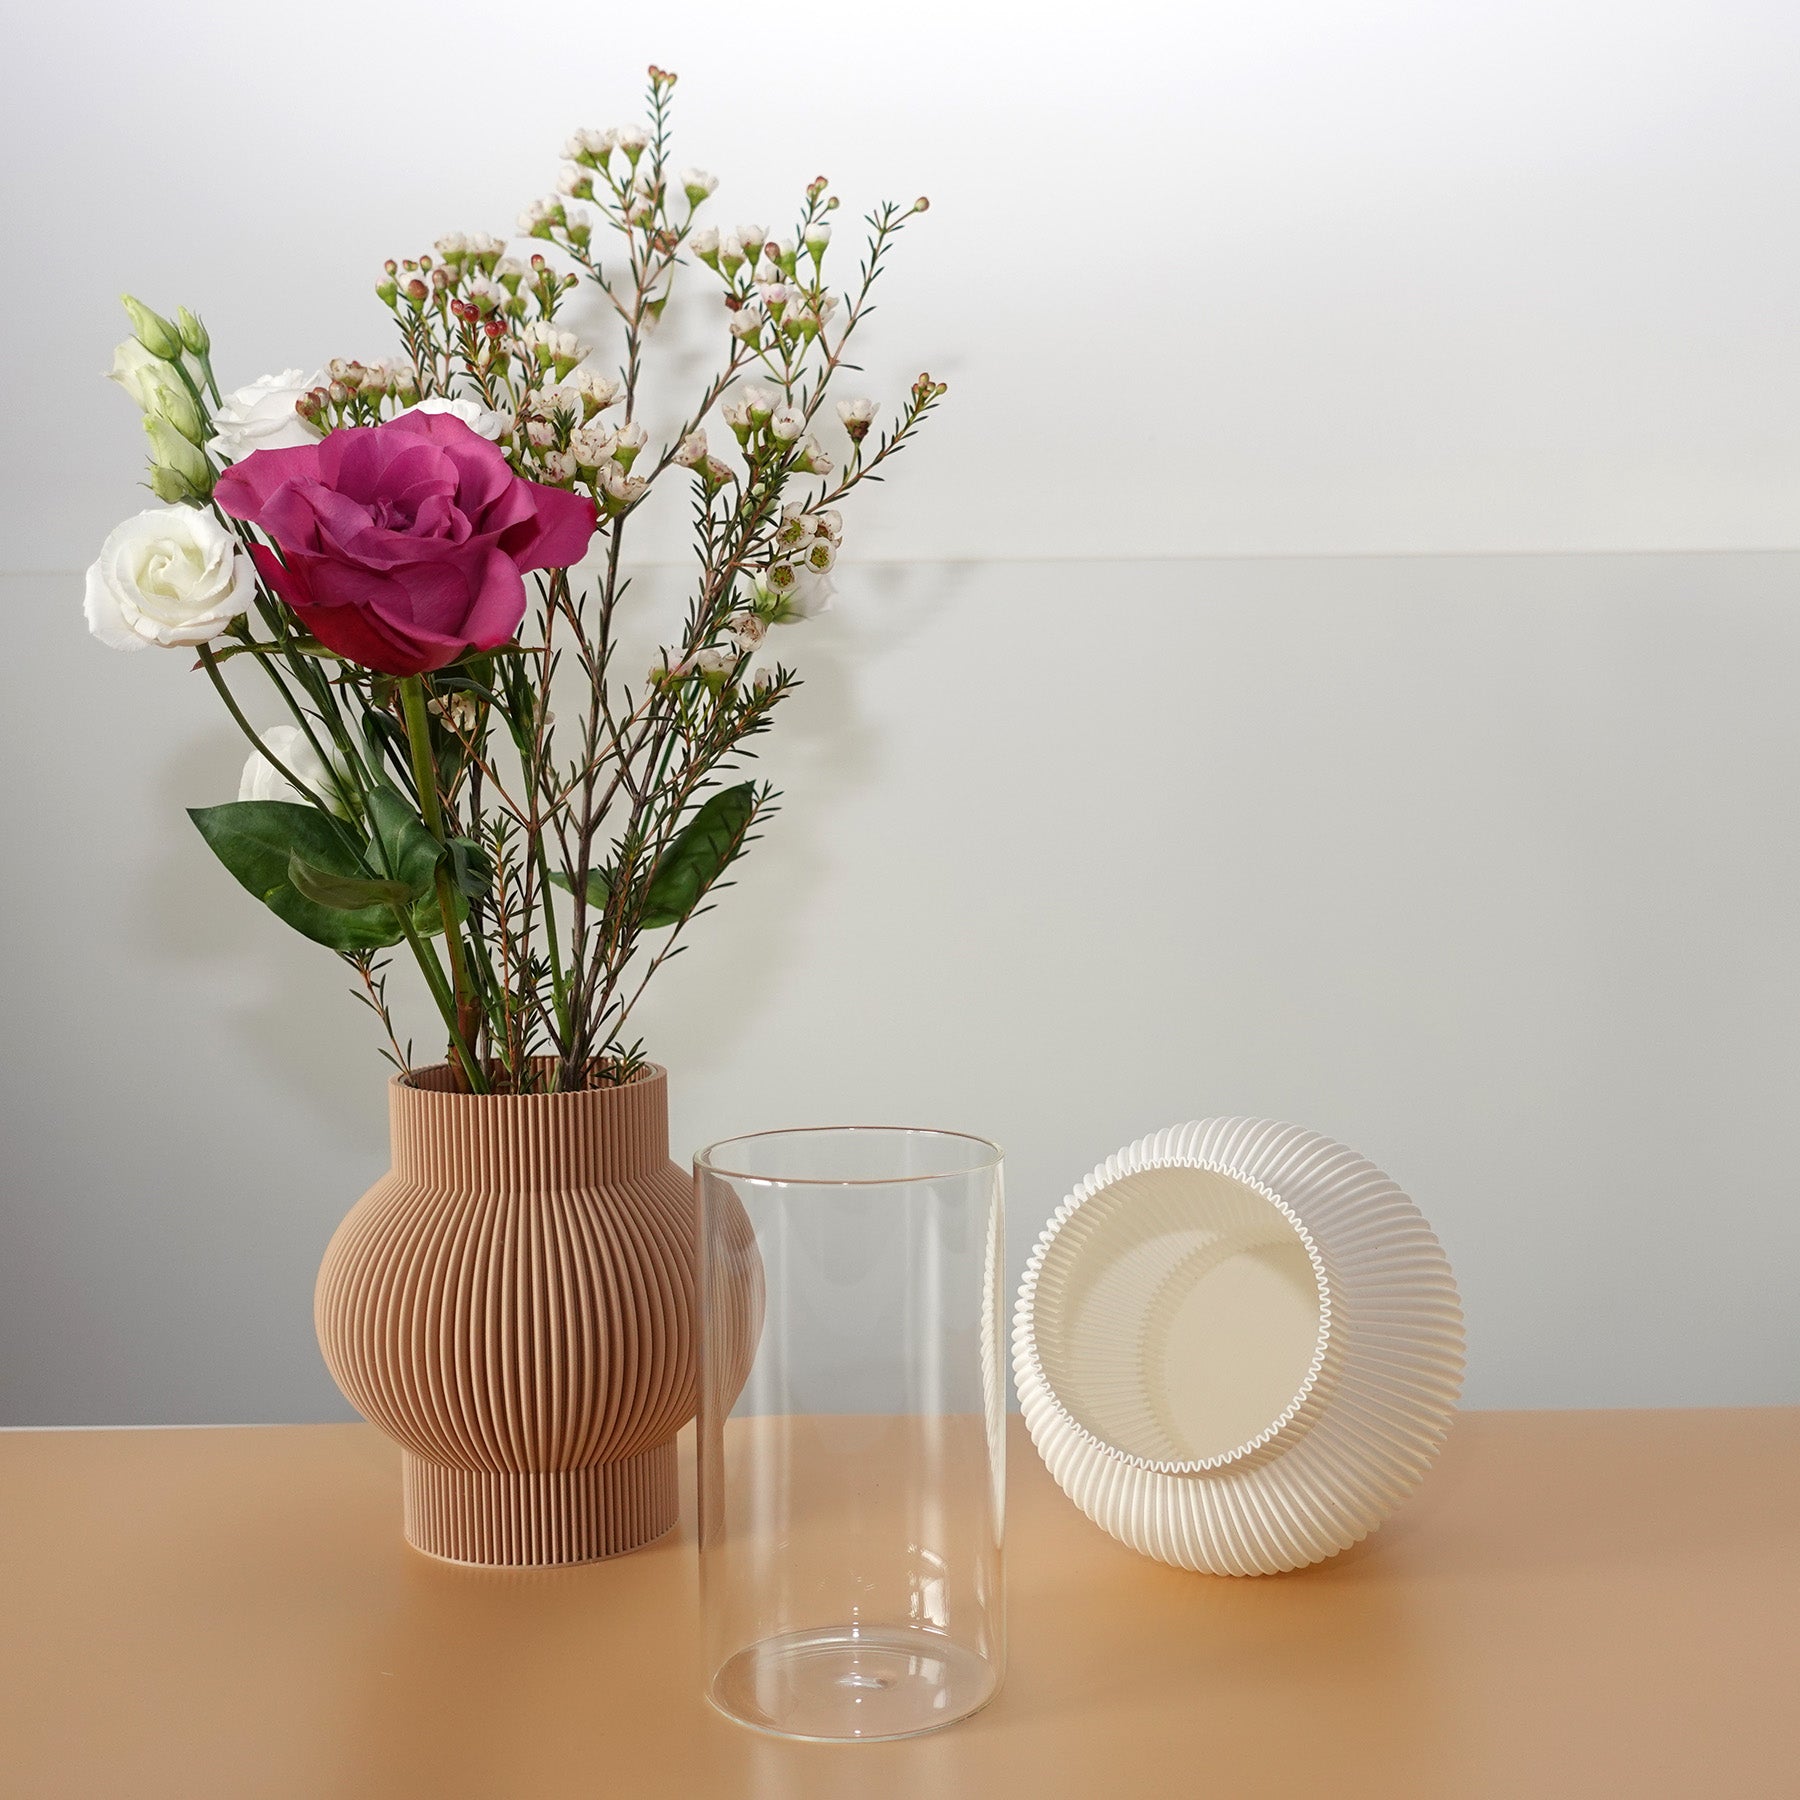 Nachhaltige Vase "Sylvester" aus dem 3D-Drucker - shopstartups.de | Startup Produkte